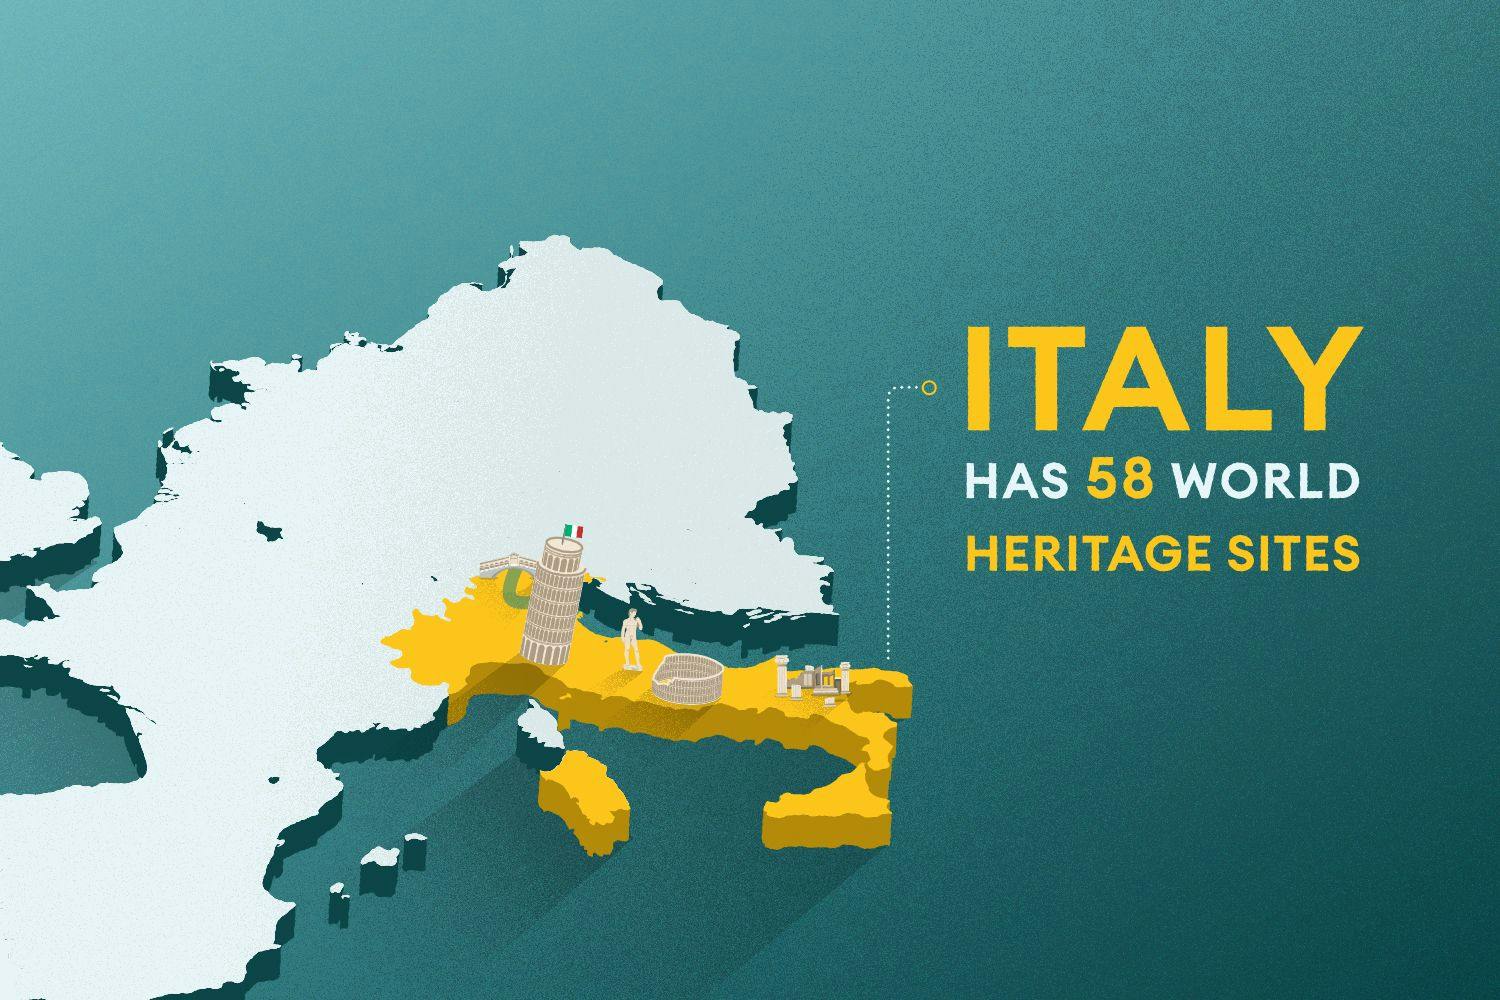 Italy has 58 World Heritage Sites 